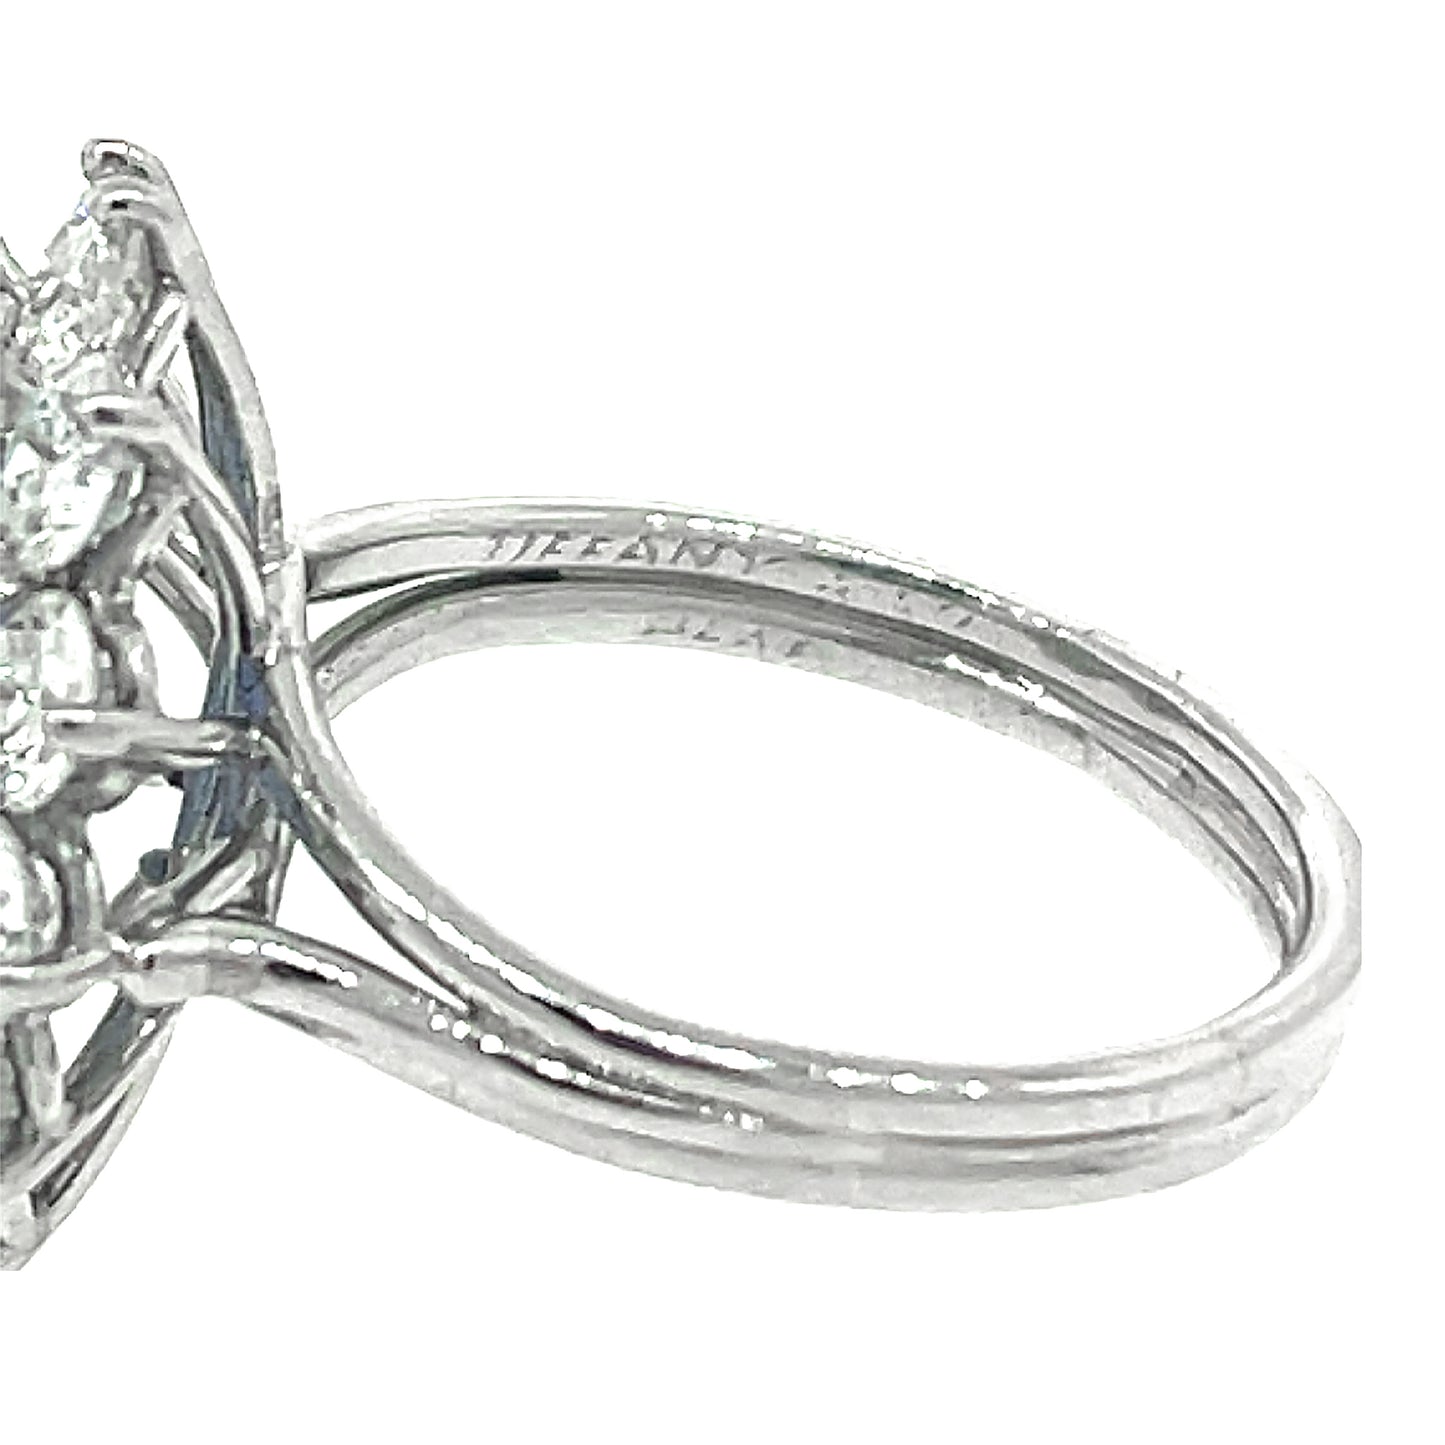 Tiffany and Co. Vintage Tanzanite and Diamond Ring